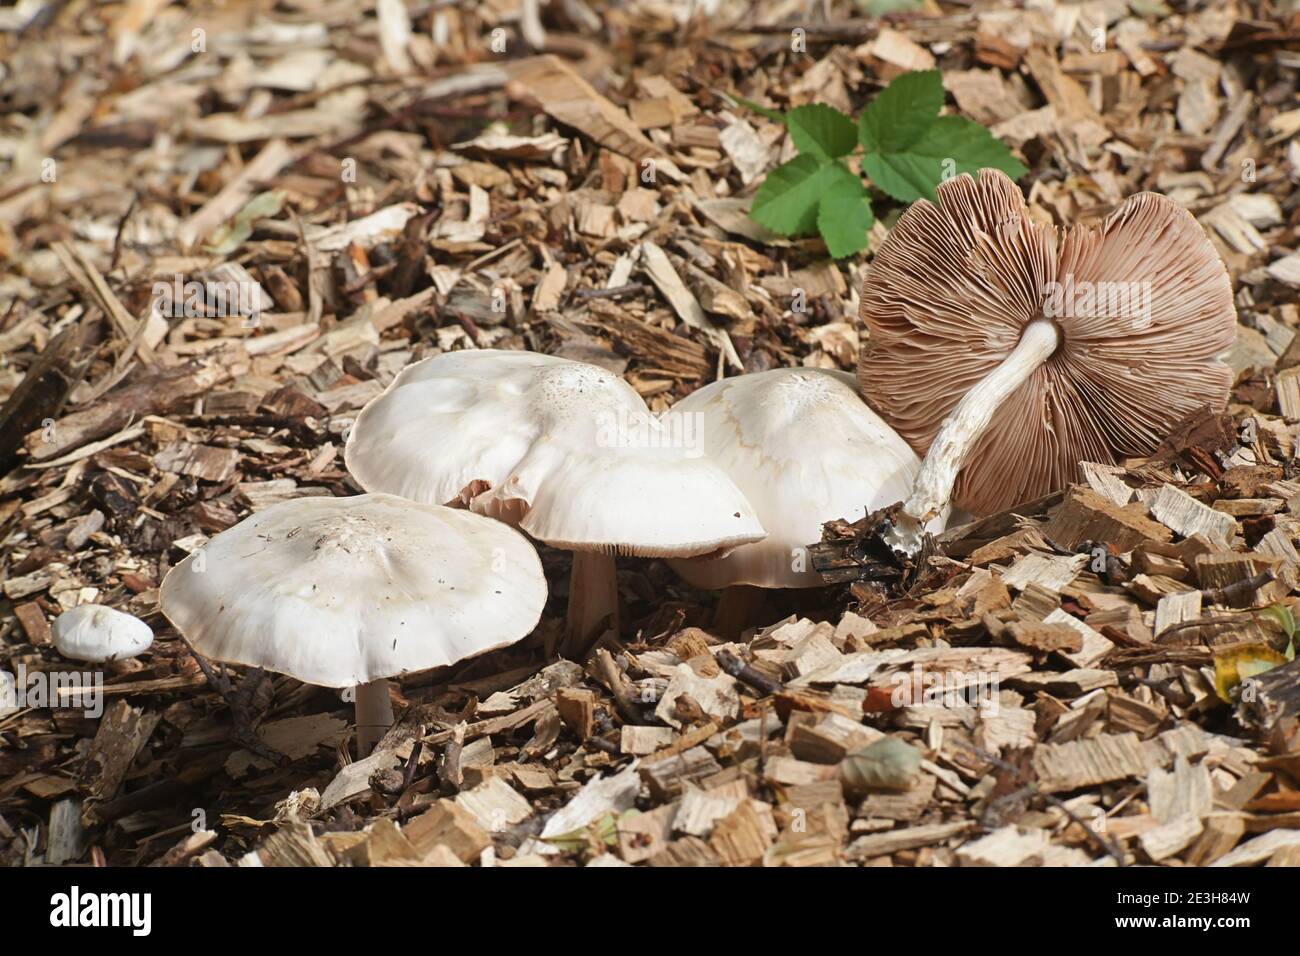 Pluteus petasatus (Pluteus petasatus coll.), a shield mushroom growing on wood chips in Finland, no common english name Stock Photo